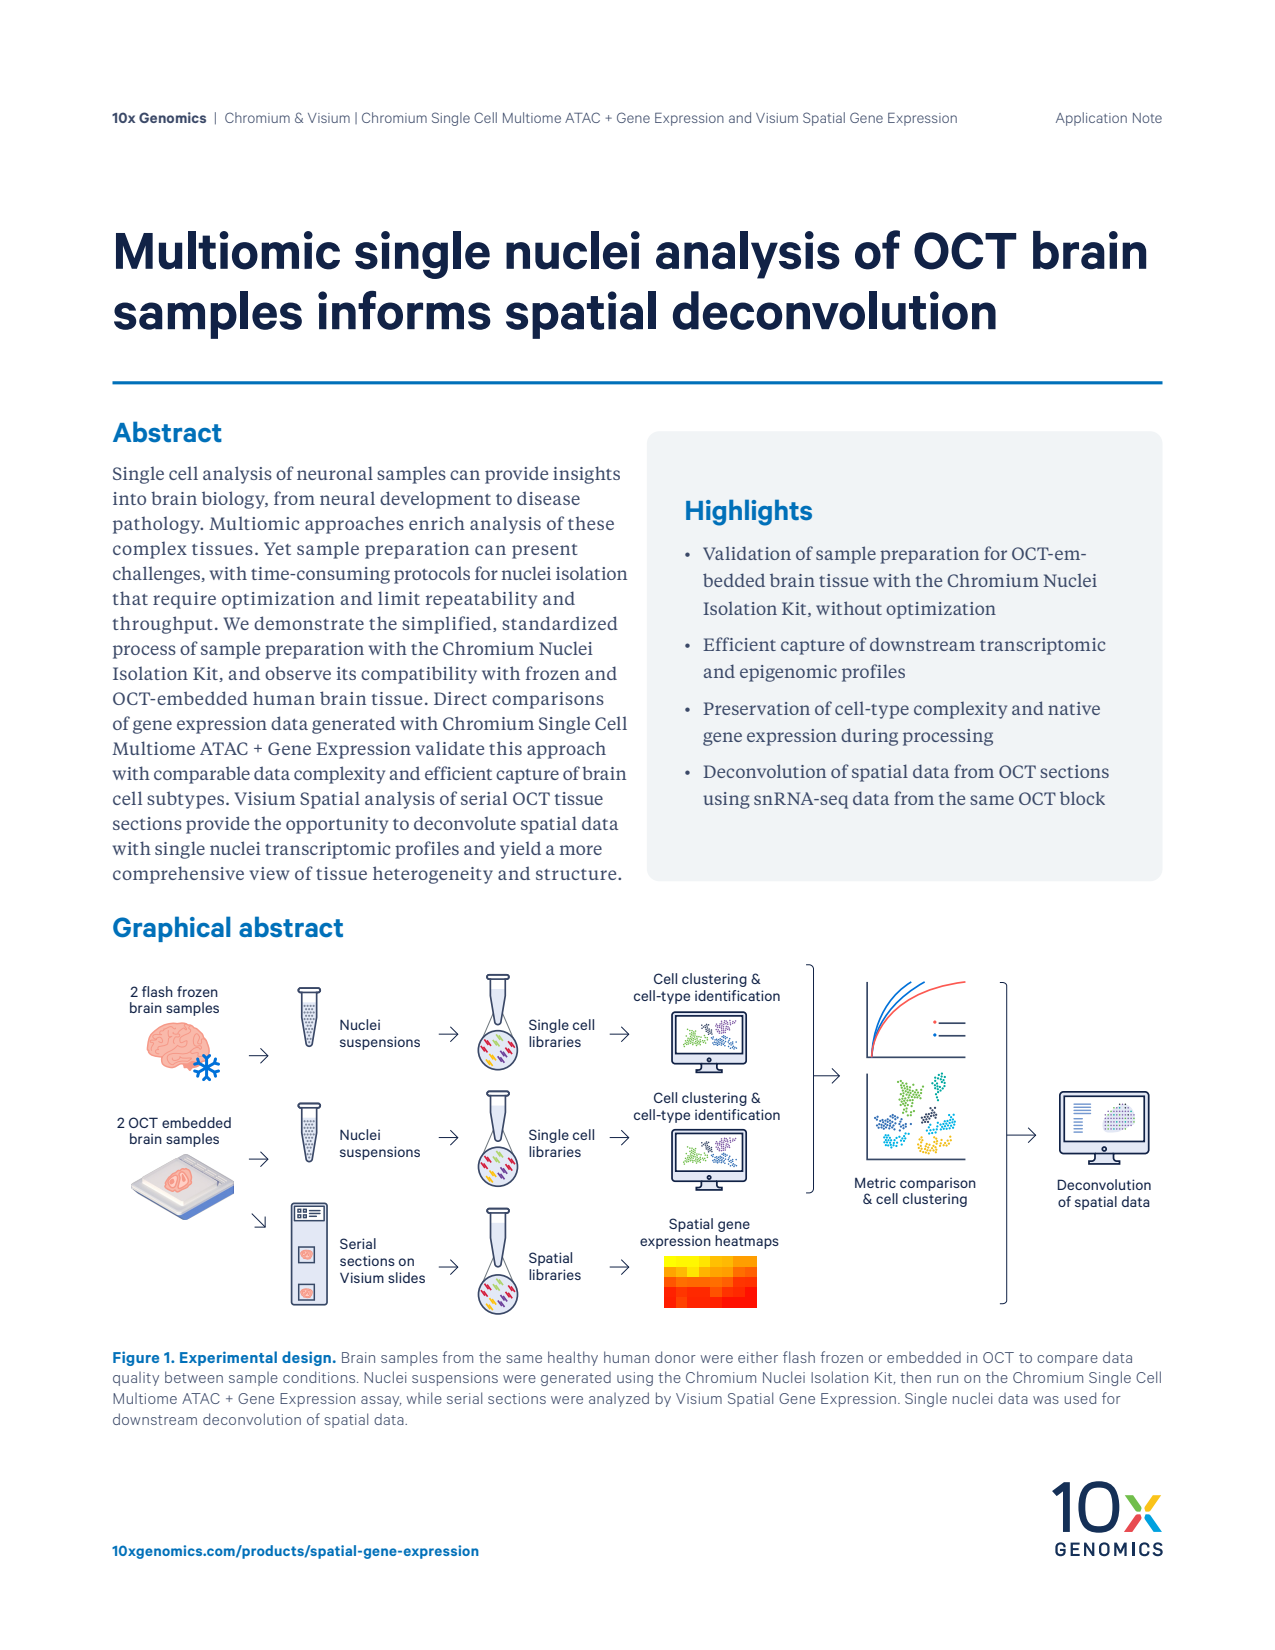 Multiomic single nuclei analysis of OCT brain samples informs spatial deconvolution